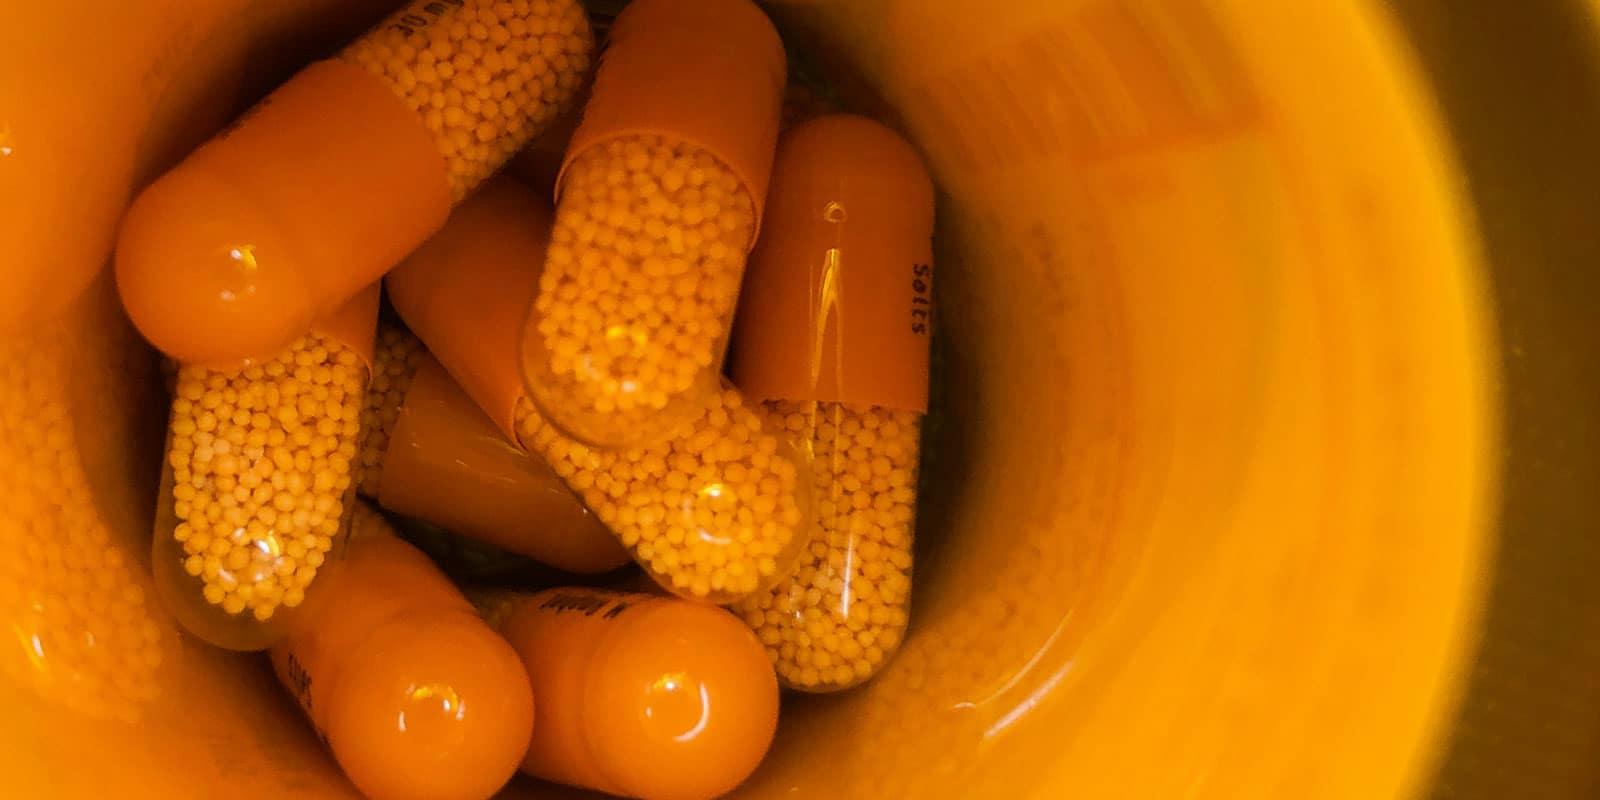 Several orange pill capsules sit in an orange container.